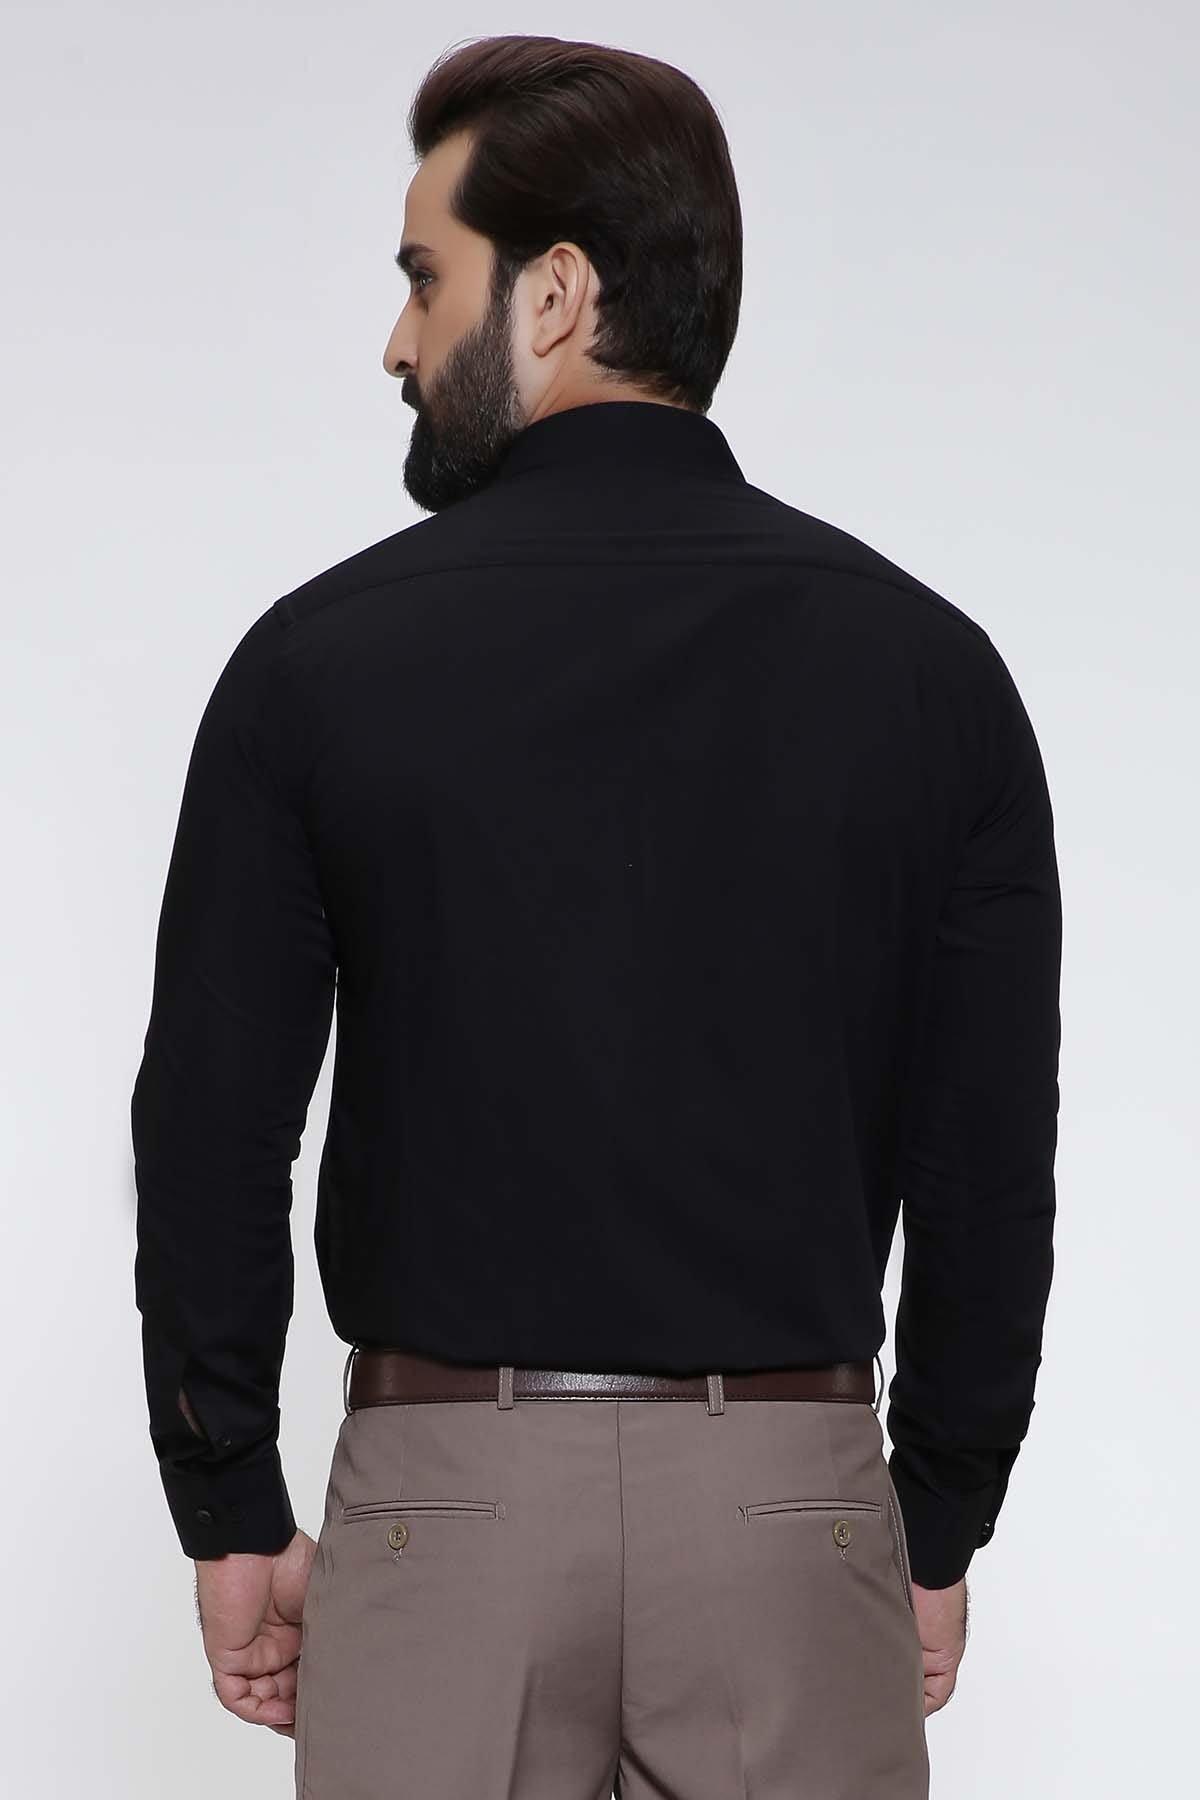 DRESS SHIRT FULL COLLAR BLACK at Charcoal Clothing